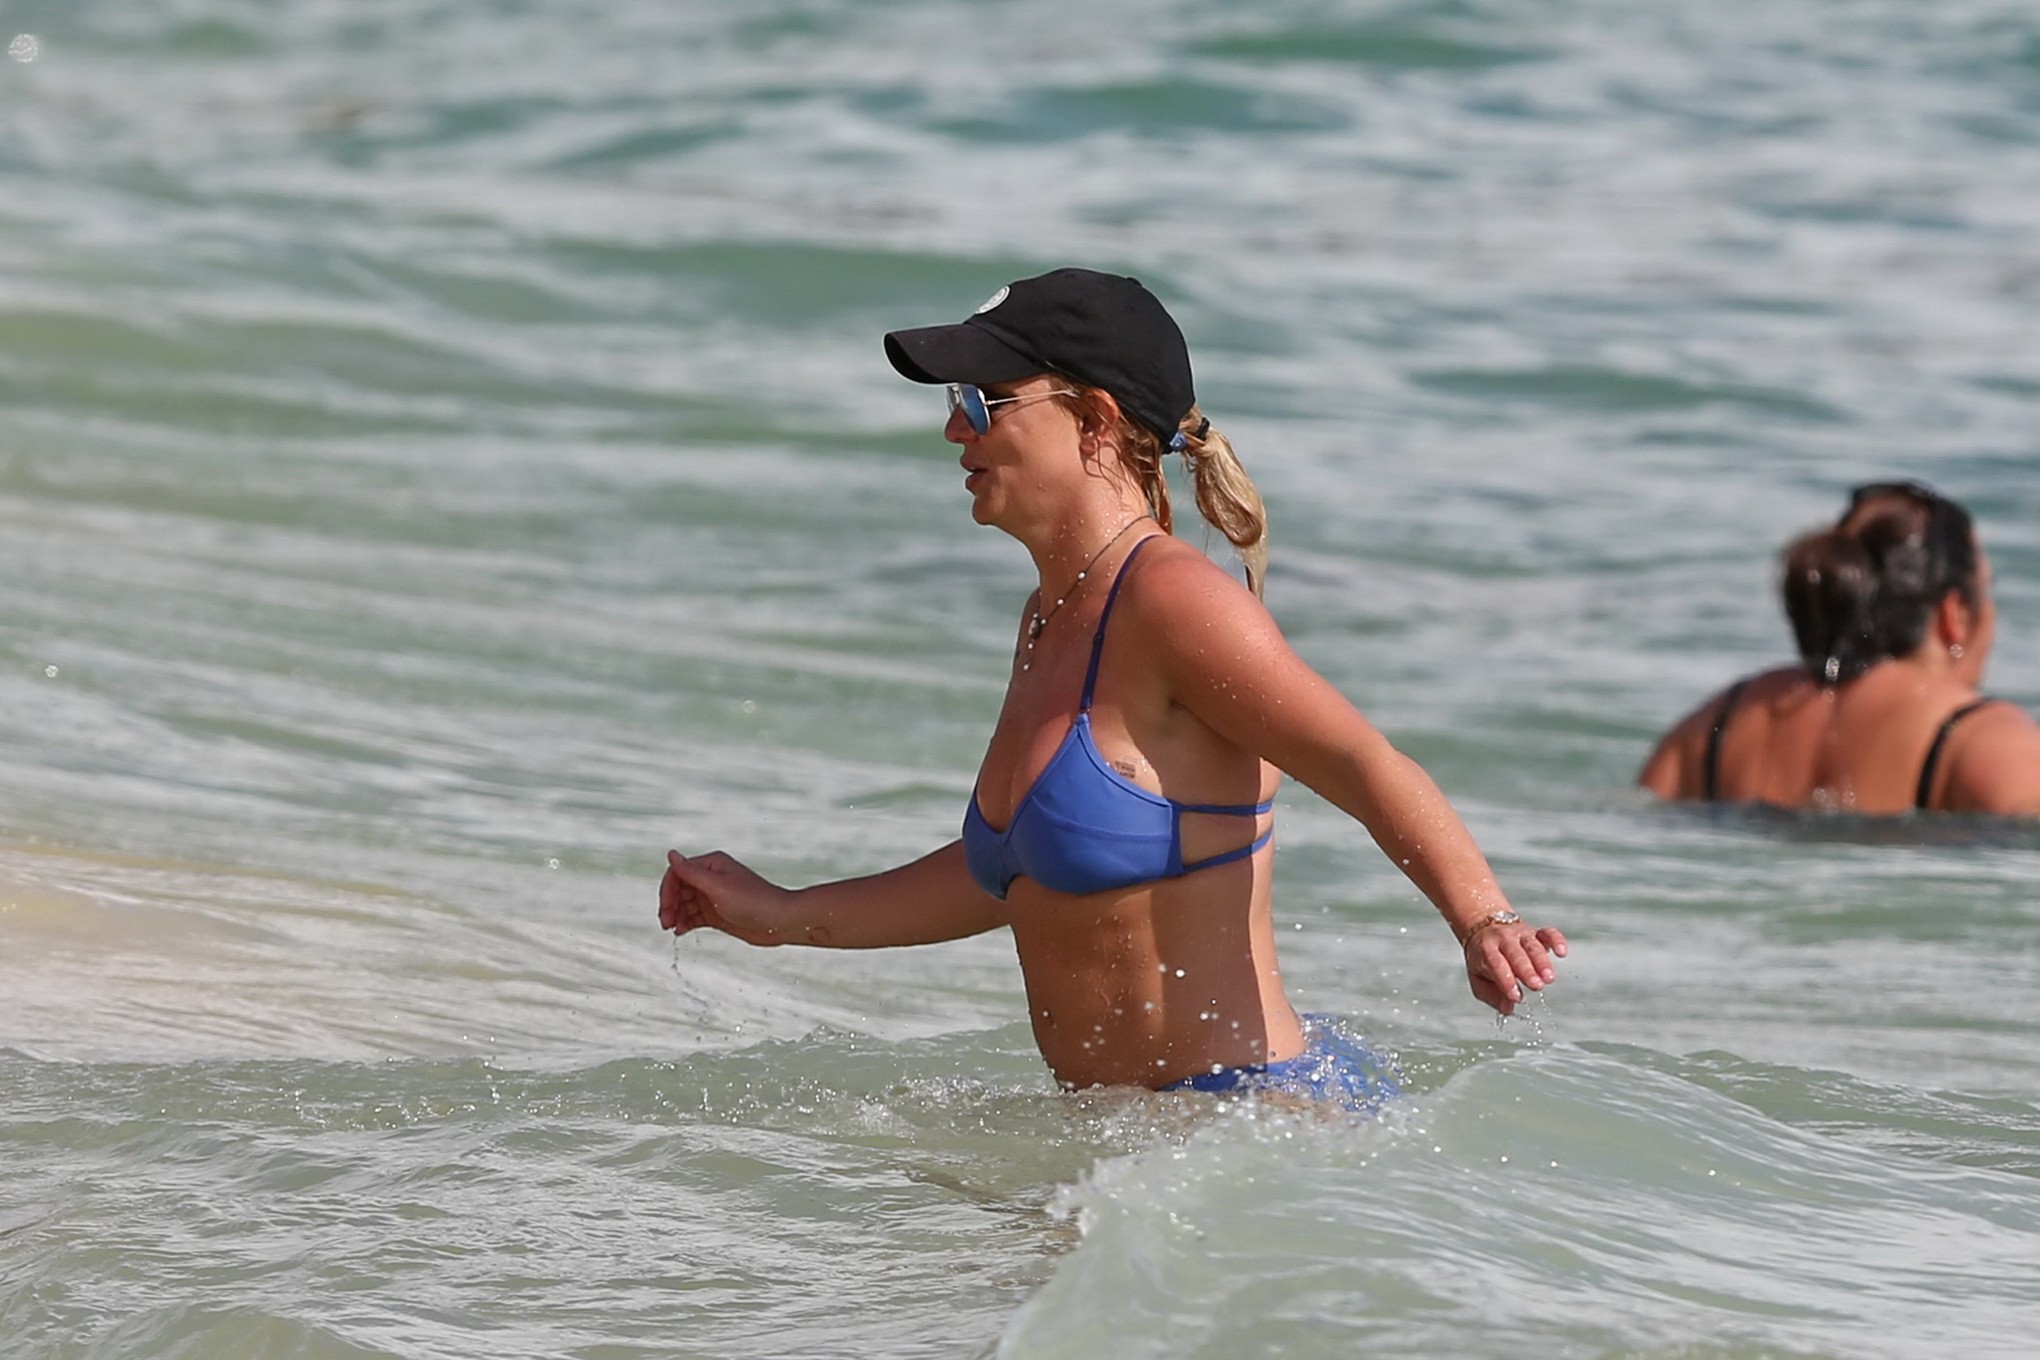 Britney spears bottino indossando succinto bikini blu in spiaggia alle Hawaii
 #75168943